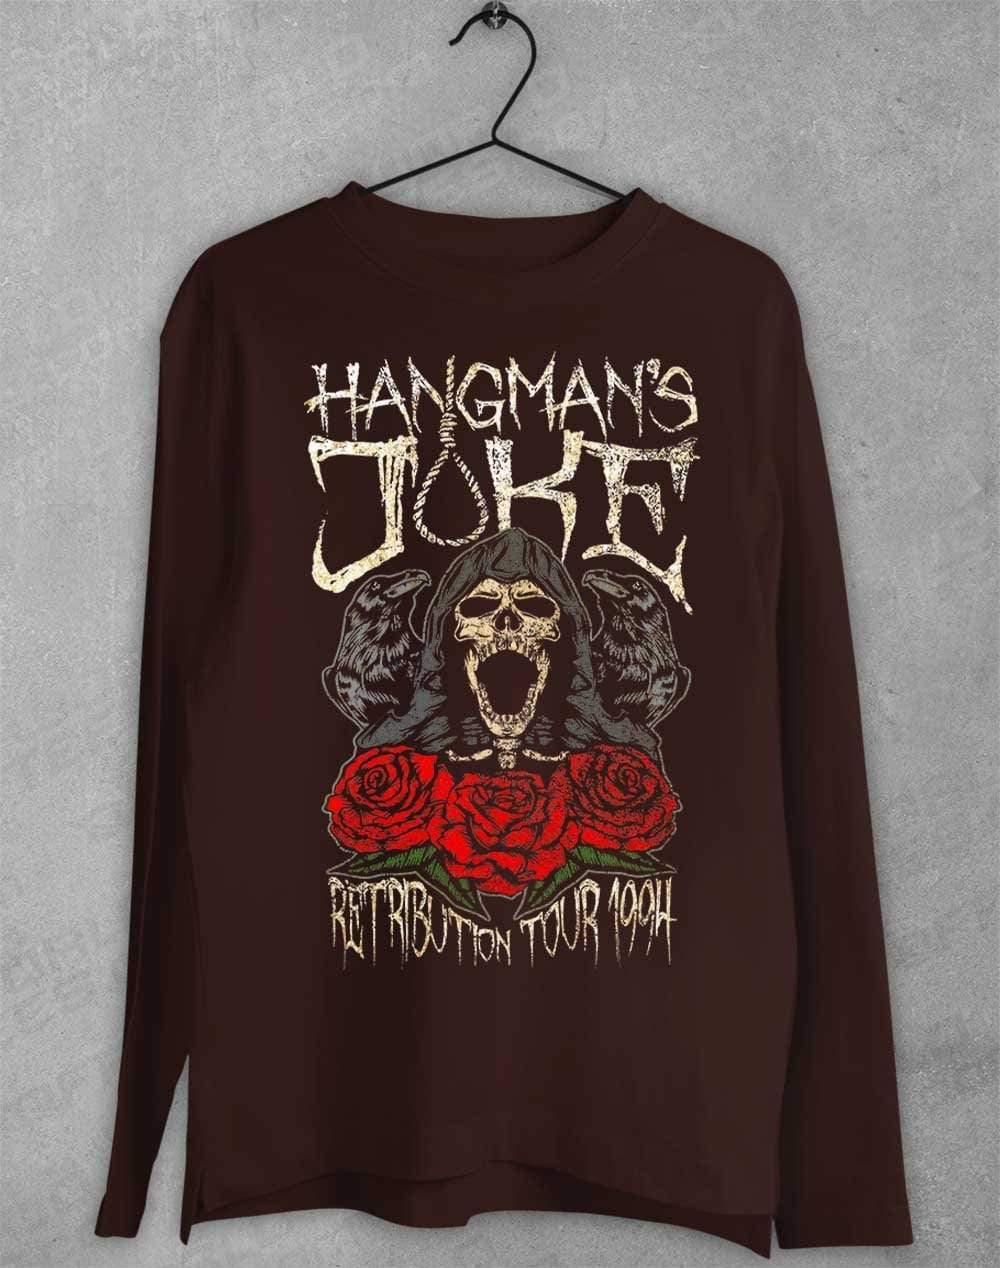 Hangman's Joke Retribution Tour 94 Long Sleeve T-Shirt S / Dark Chocolate  - Off World Tees